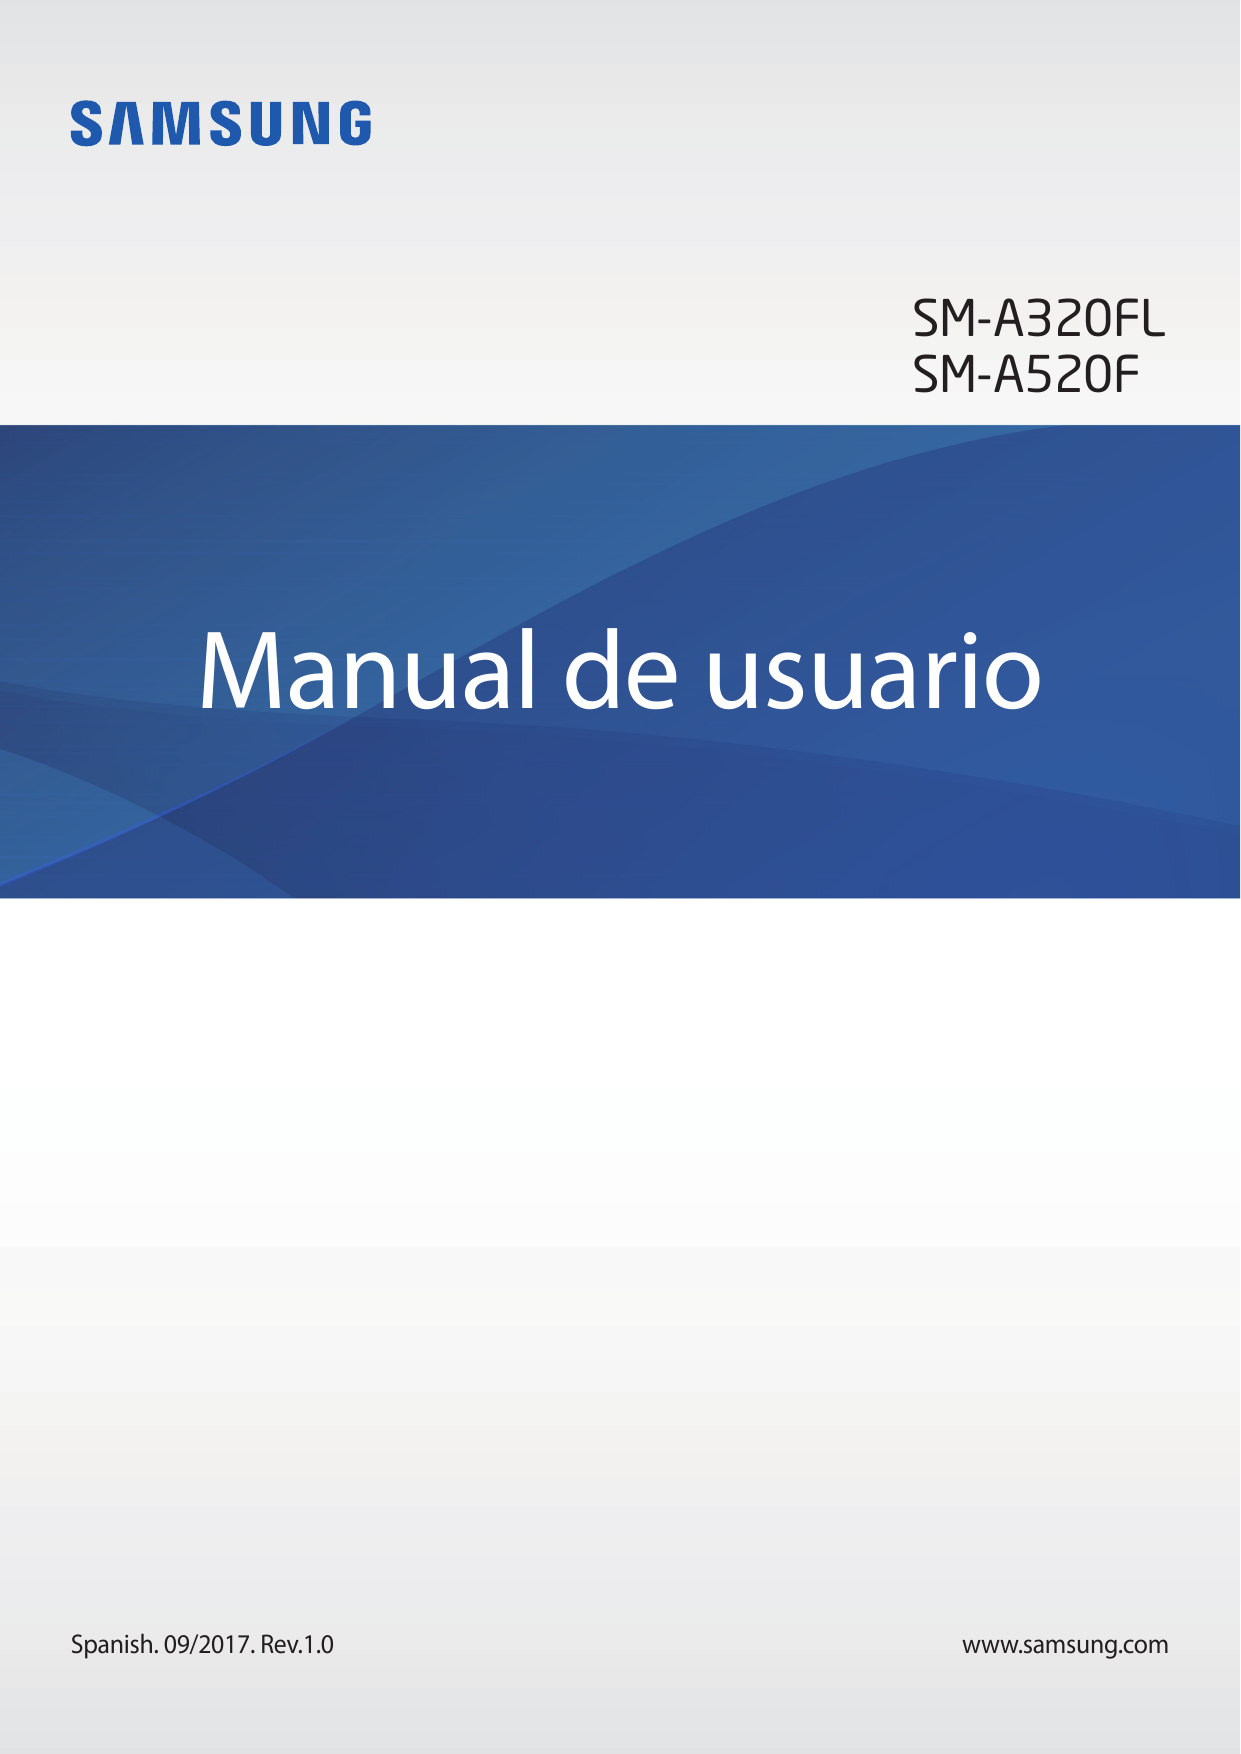 SM-A320FLSM-A520FManual de usuarioSpanish. 09/2017. Rev.1.0www.samsung.com